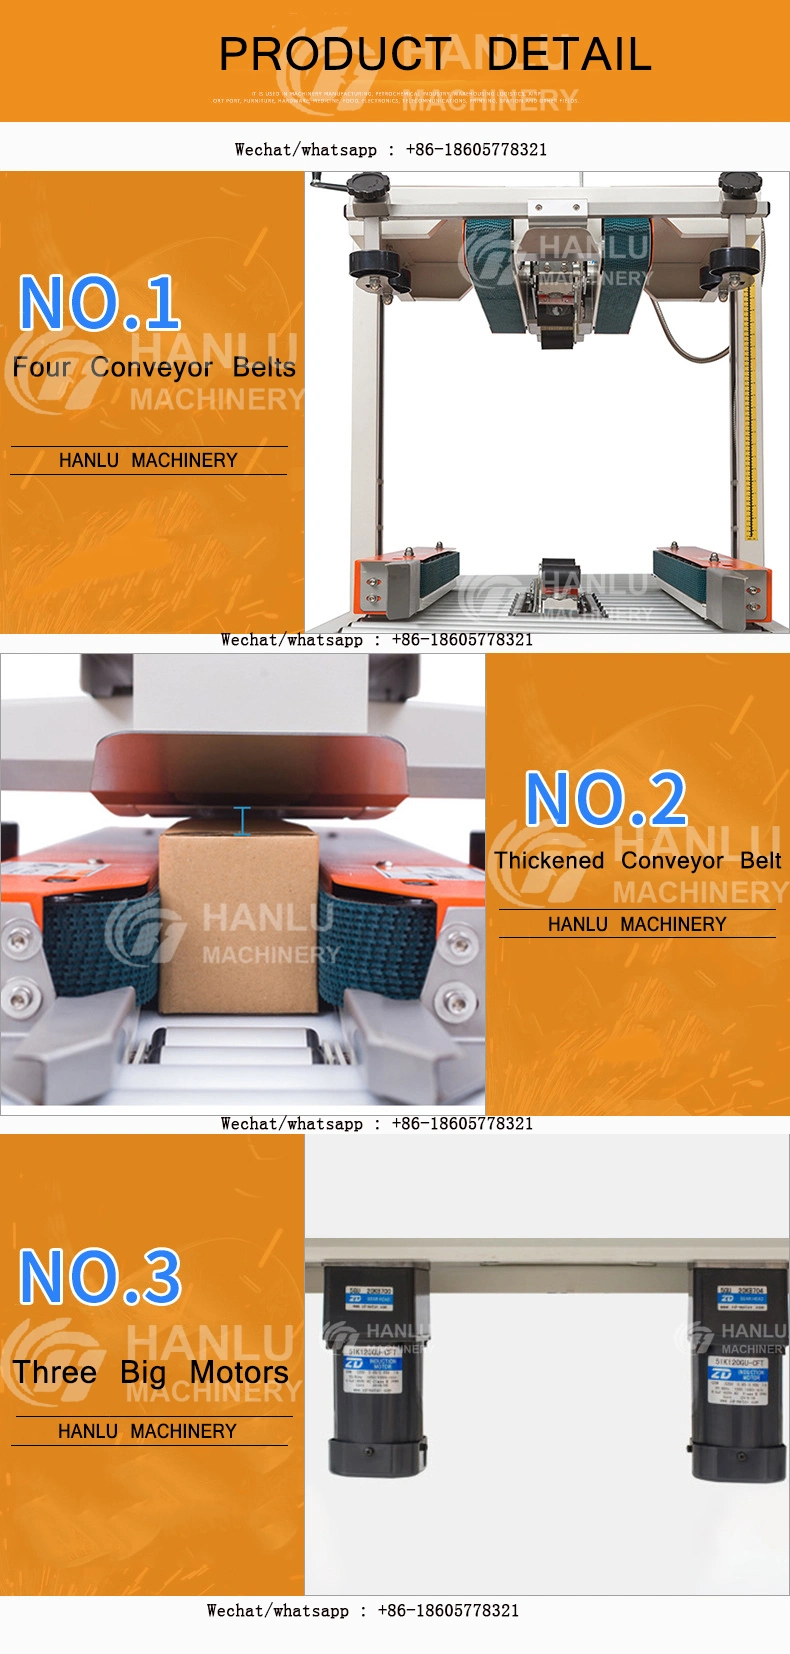 Dfxc6050A Semi-Automatic Carton Sealer (Top and Side Conveyor)